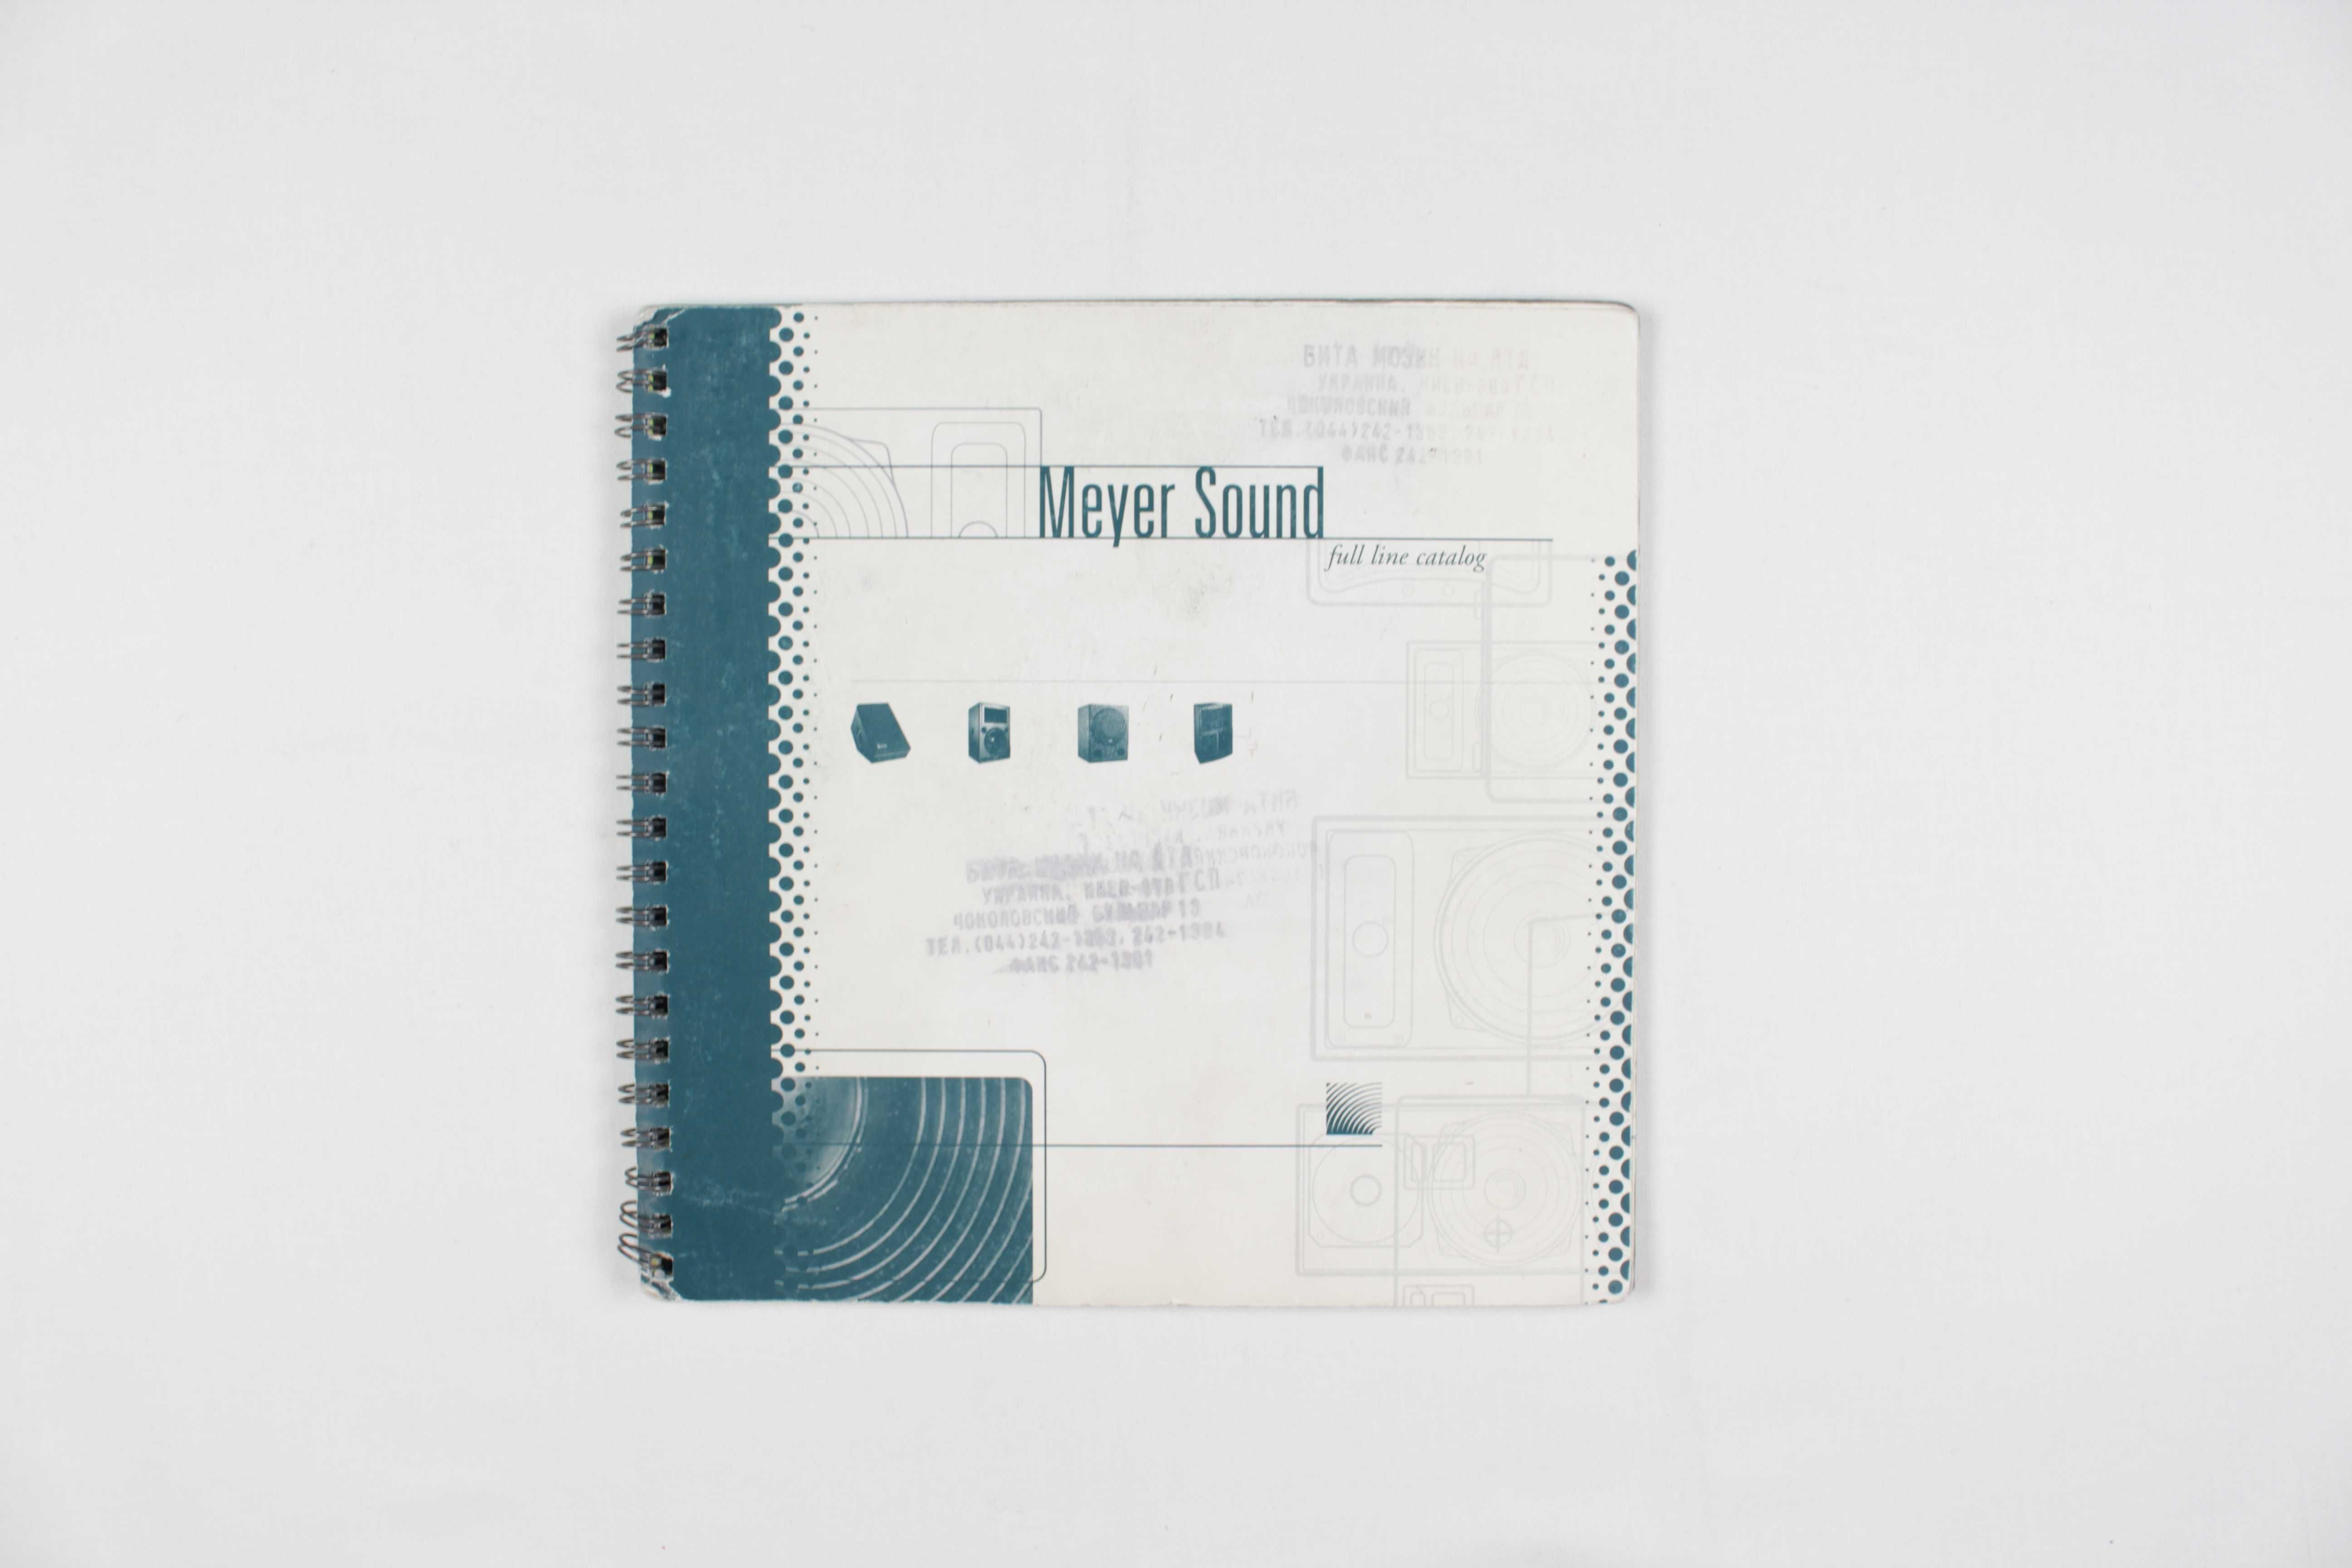 Музыкальный журнал - каталог Meyer Sound - Fuul Line Catalog